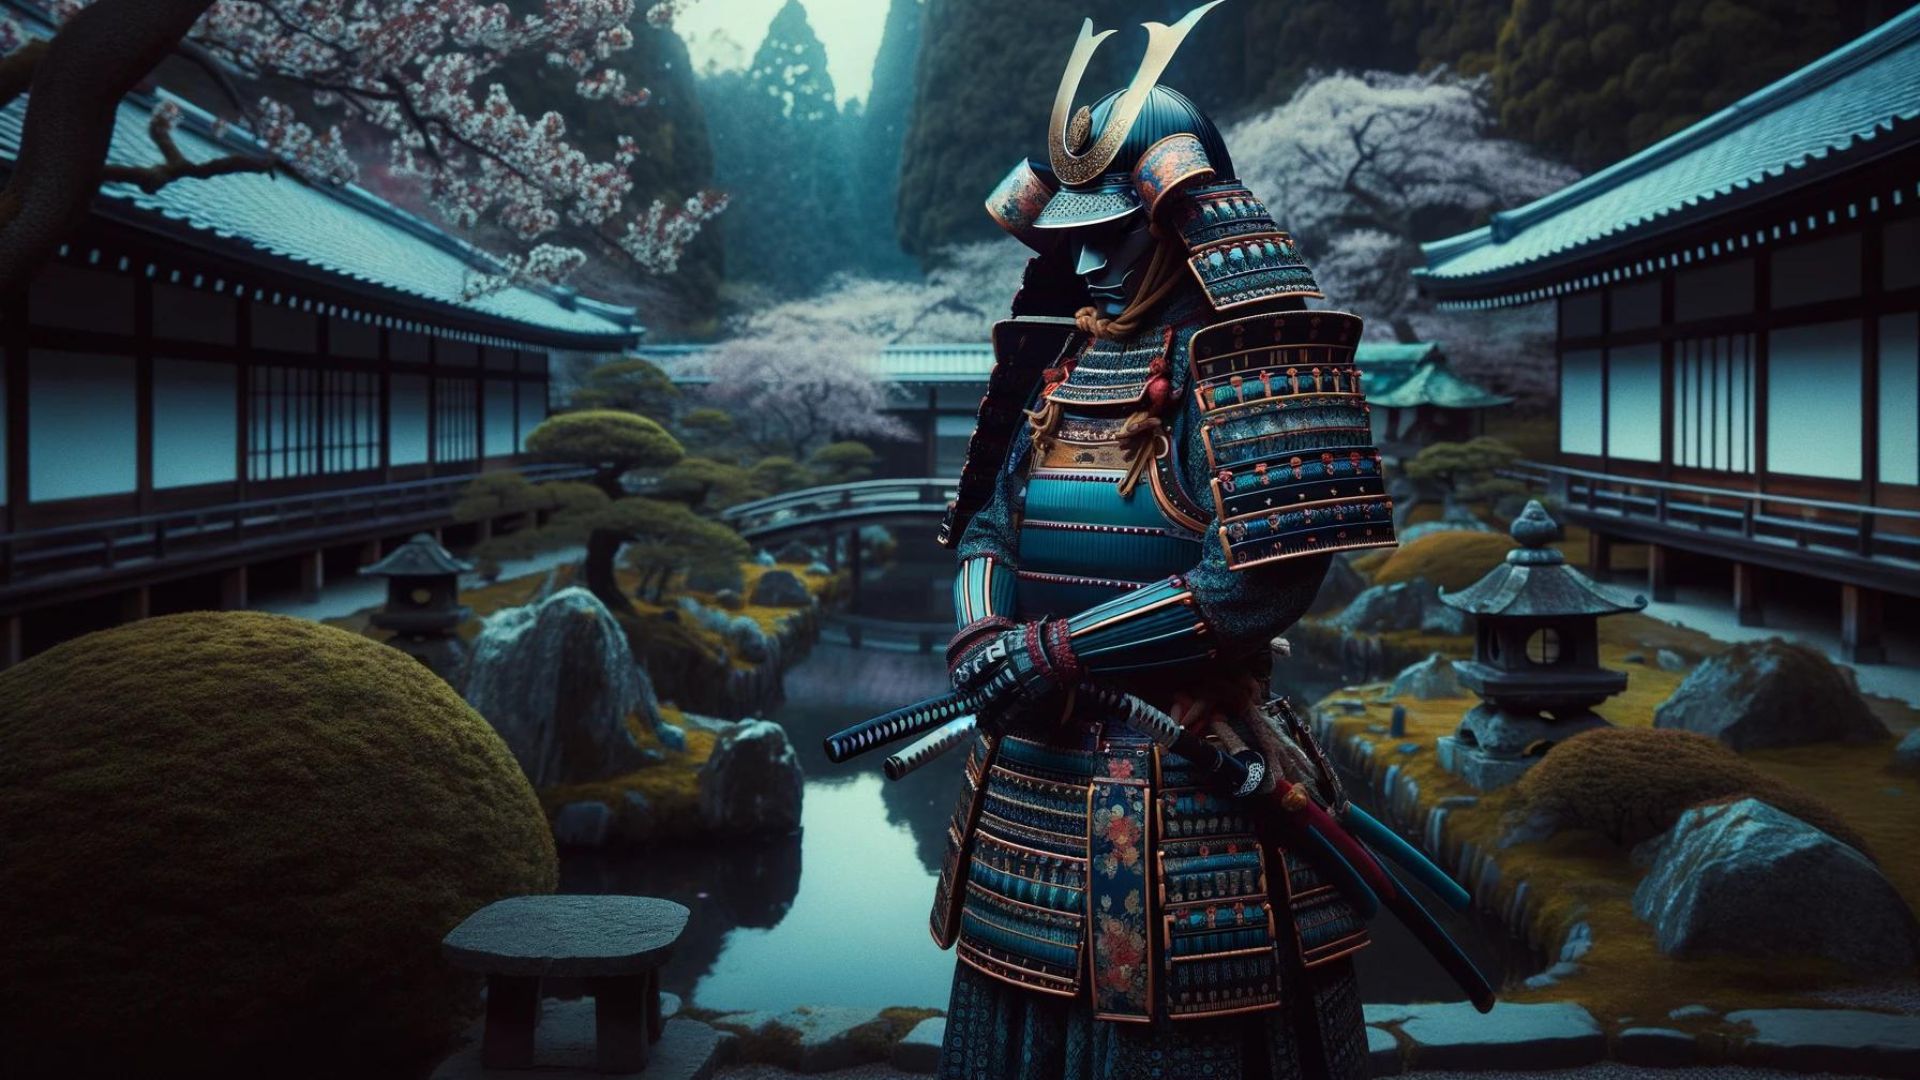 The Samurai of Feudal Japan